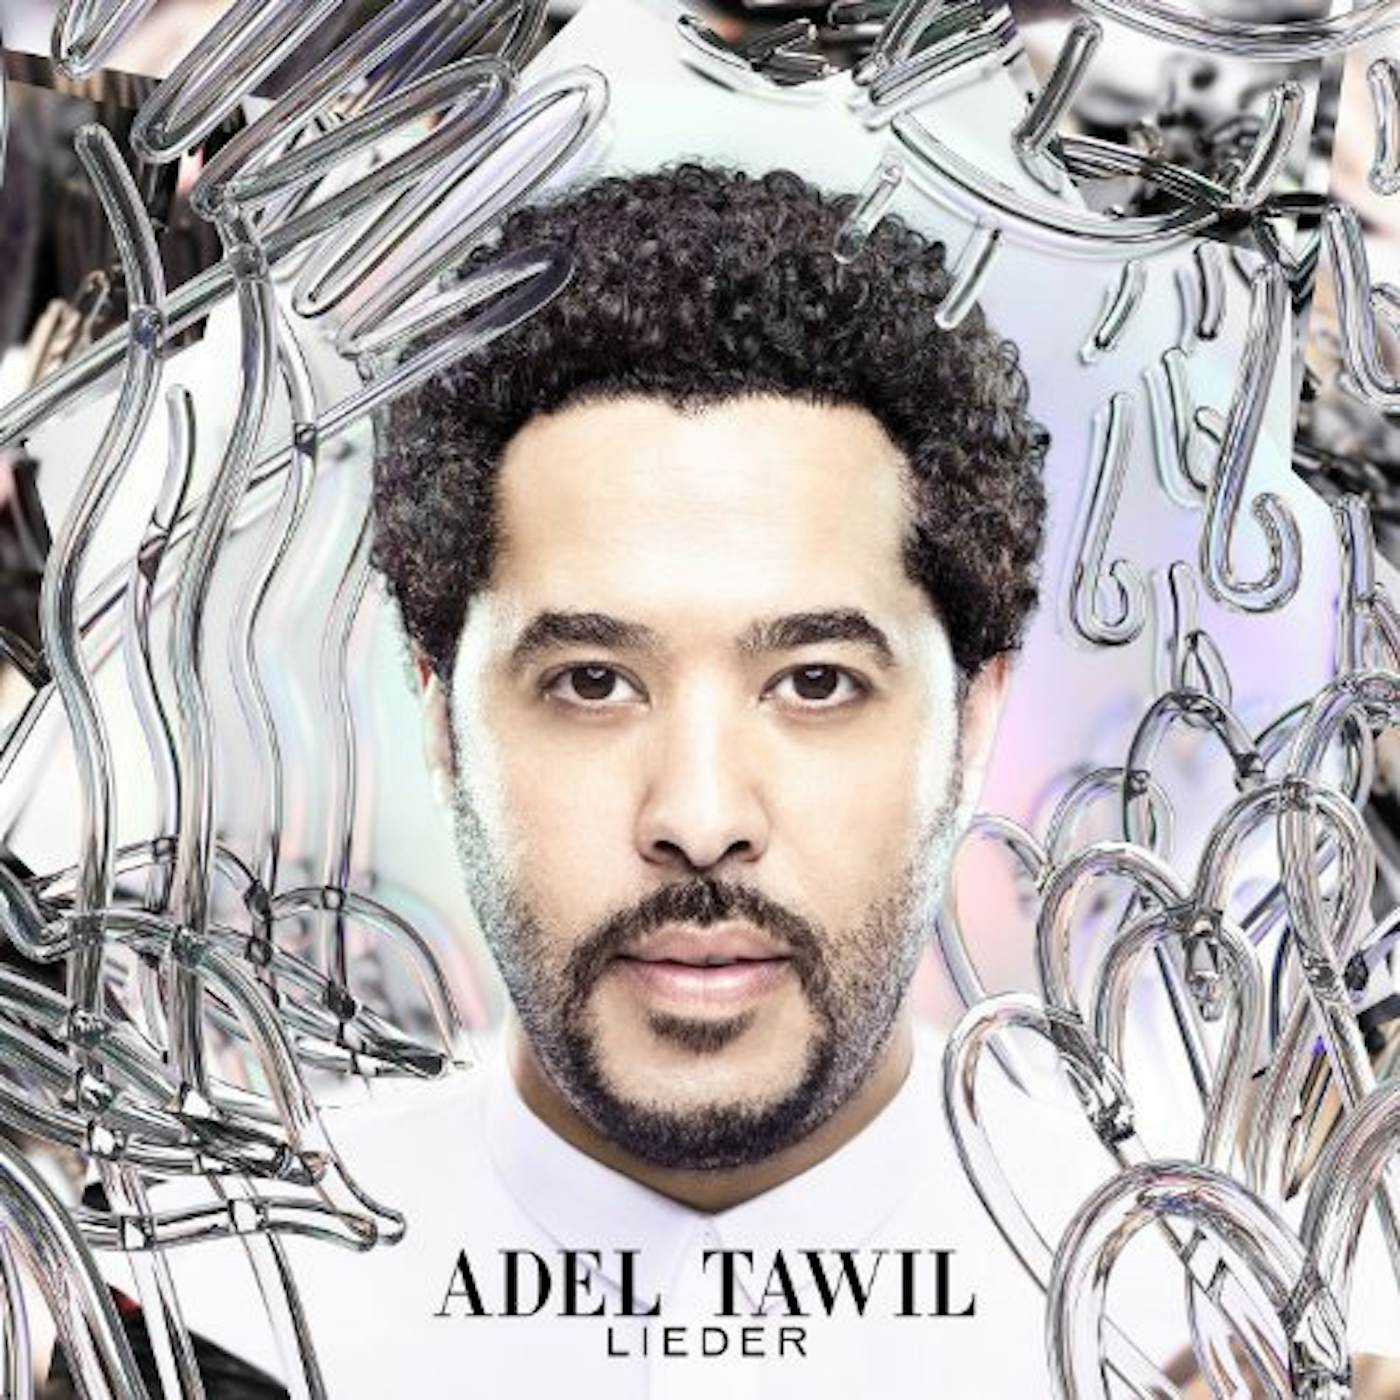 Adel Tawil LIEDER (GER) (Vinyl)